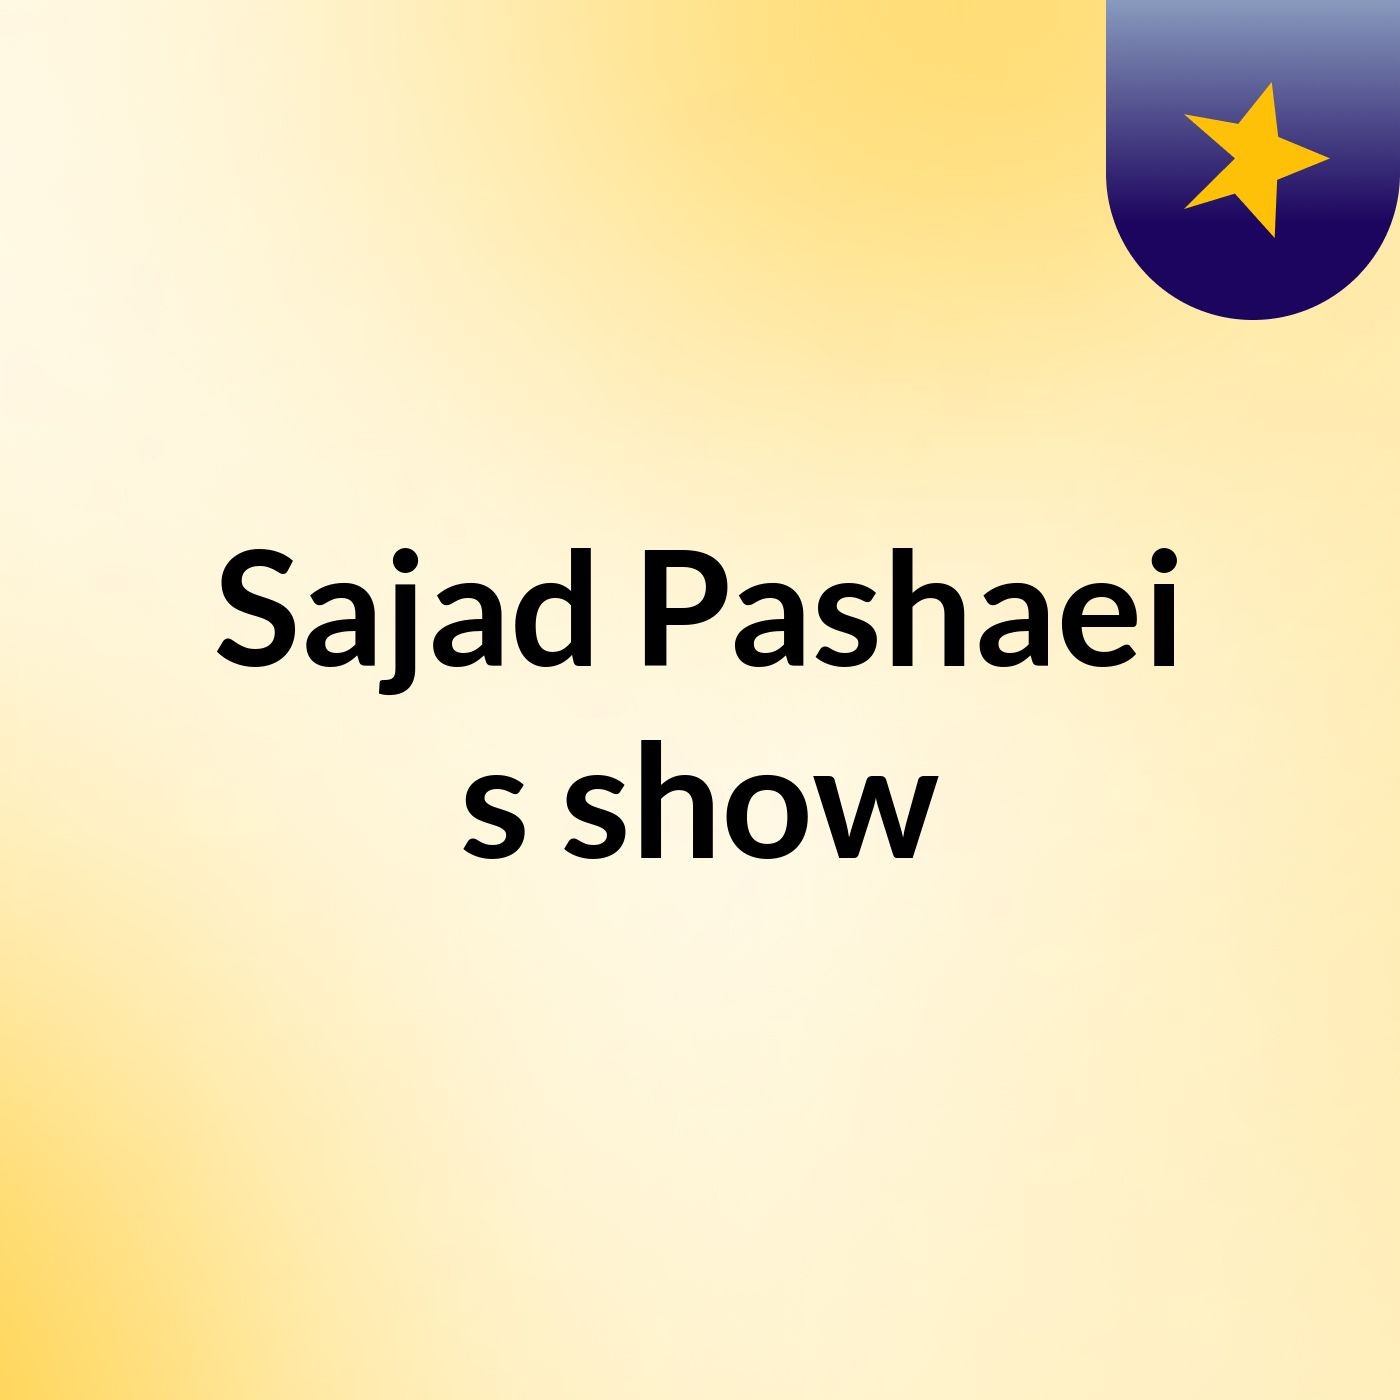 Sajad Pashaei's show